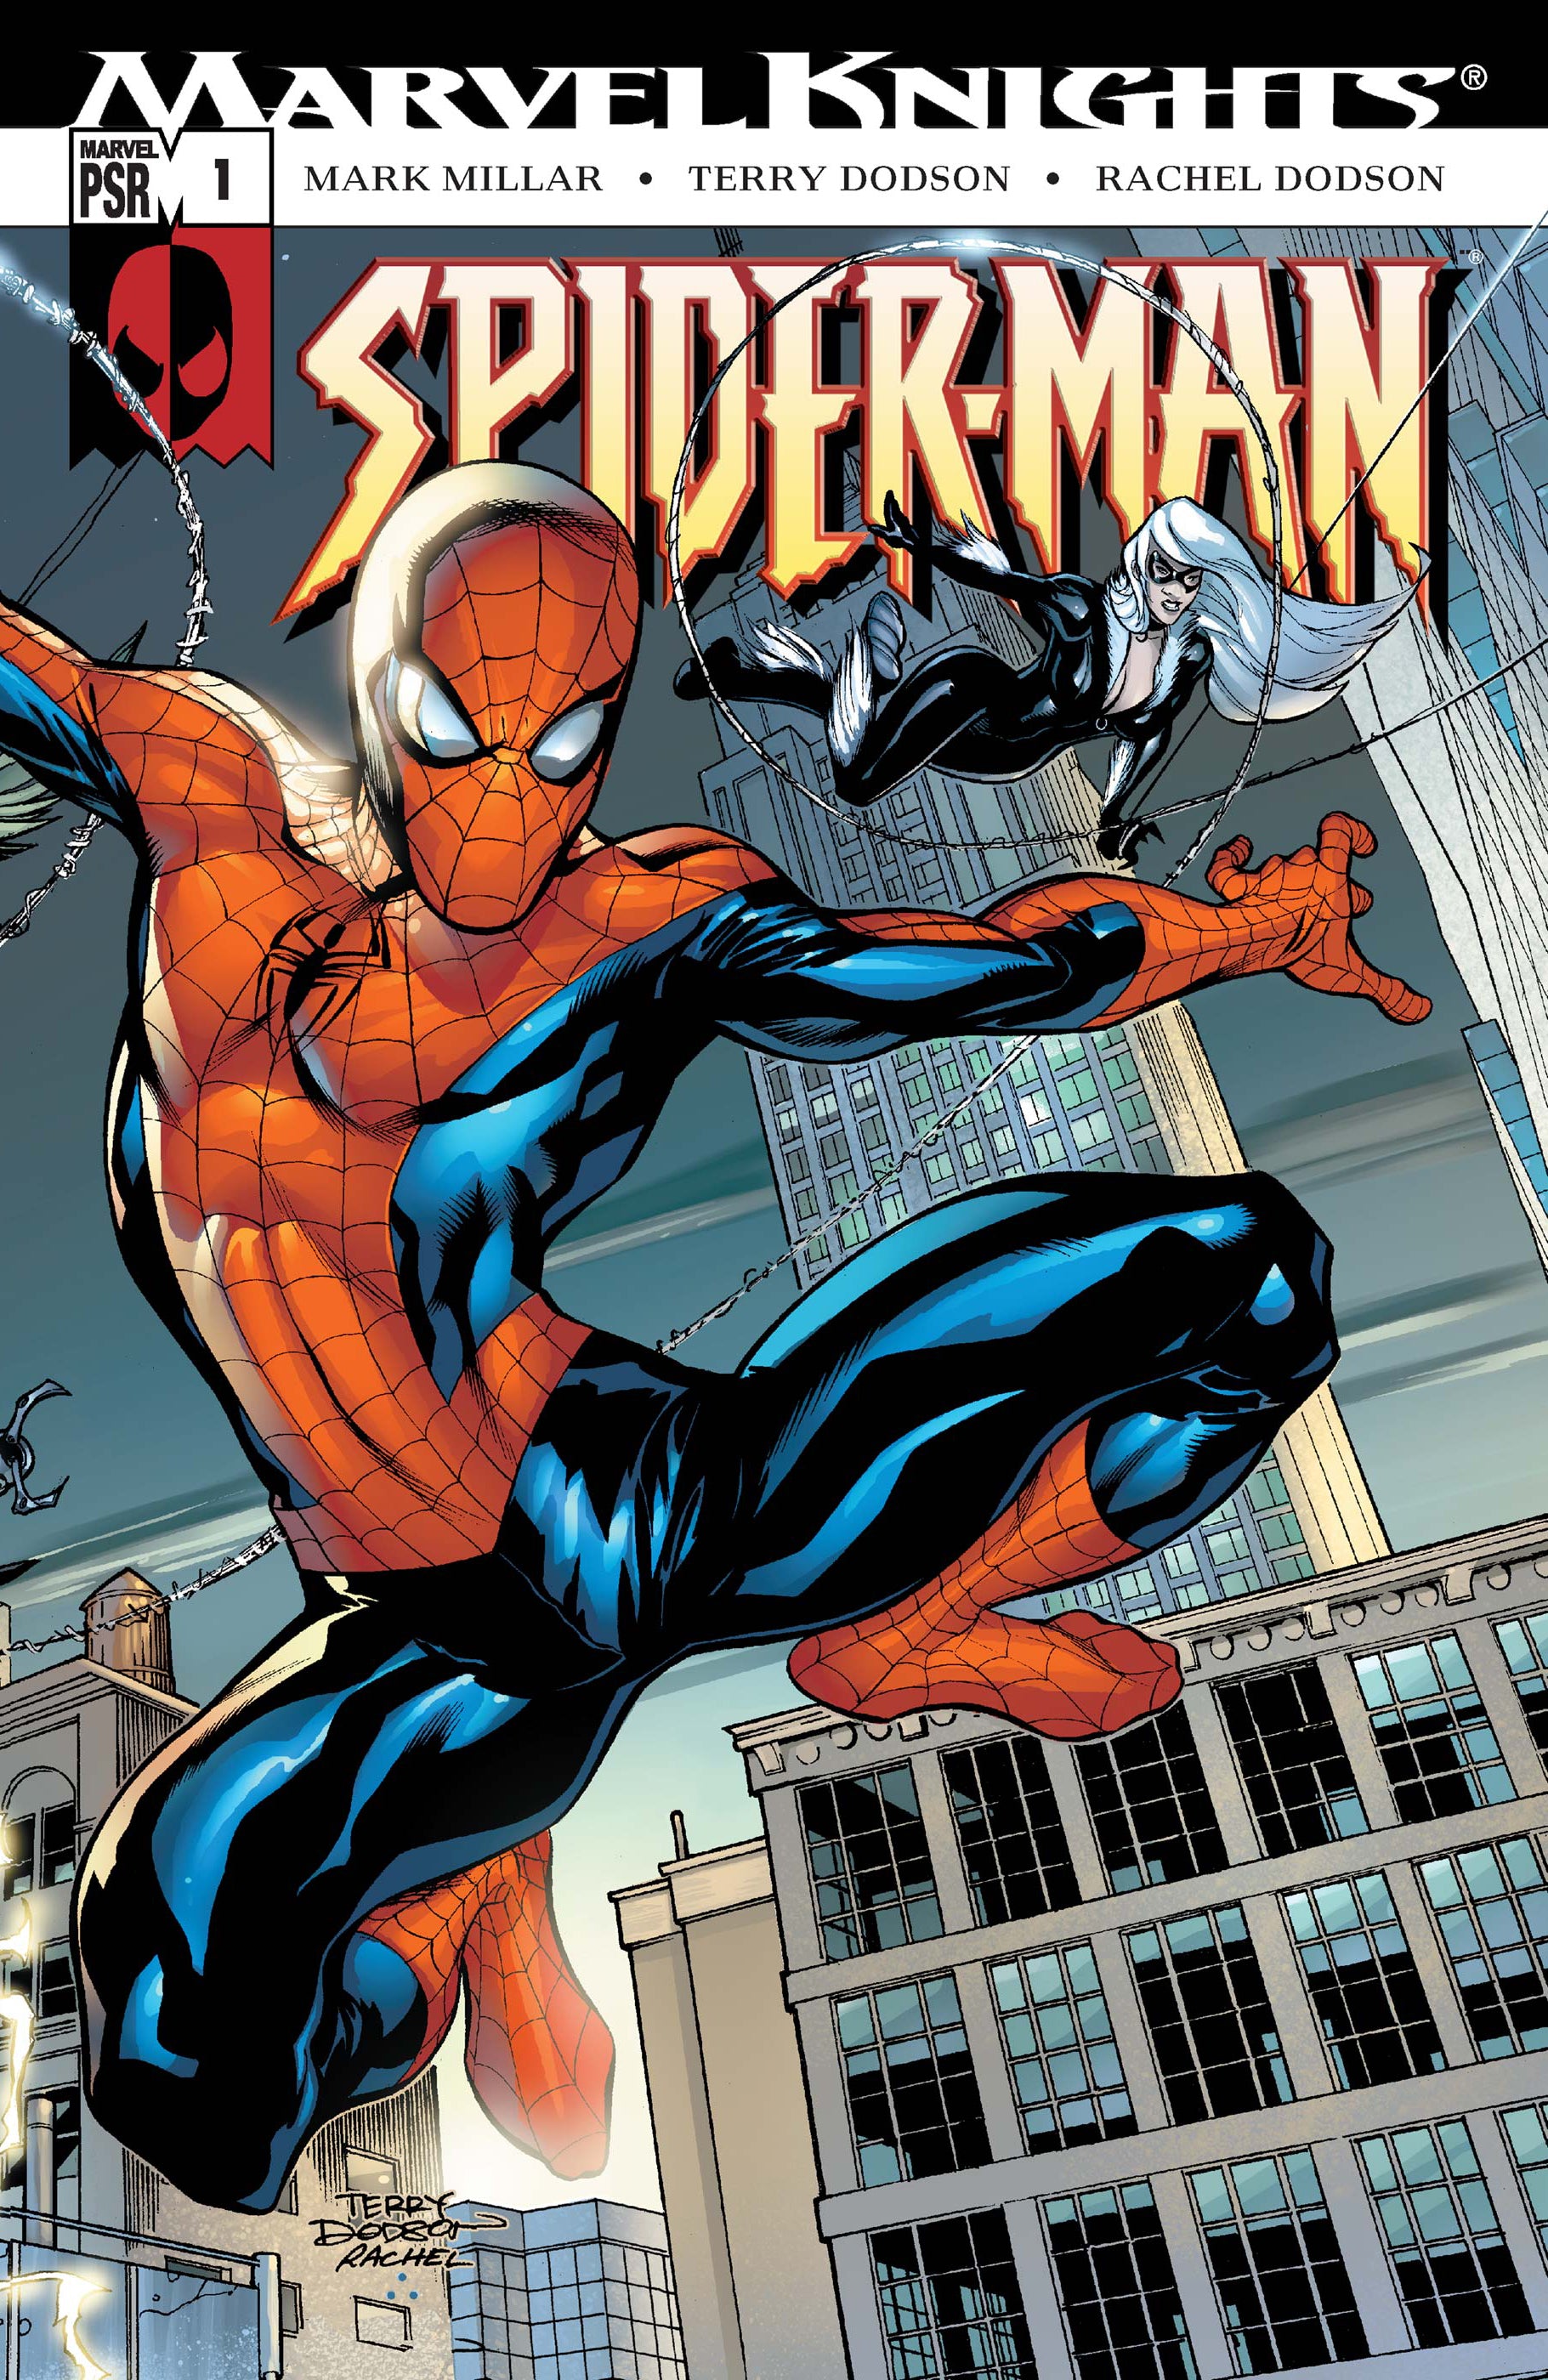 Marvel Knights Spider-Man (2004) #1 - Everything Comics